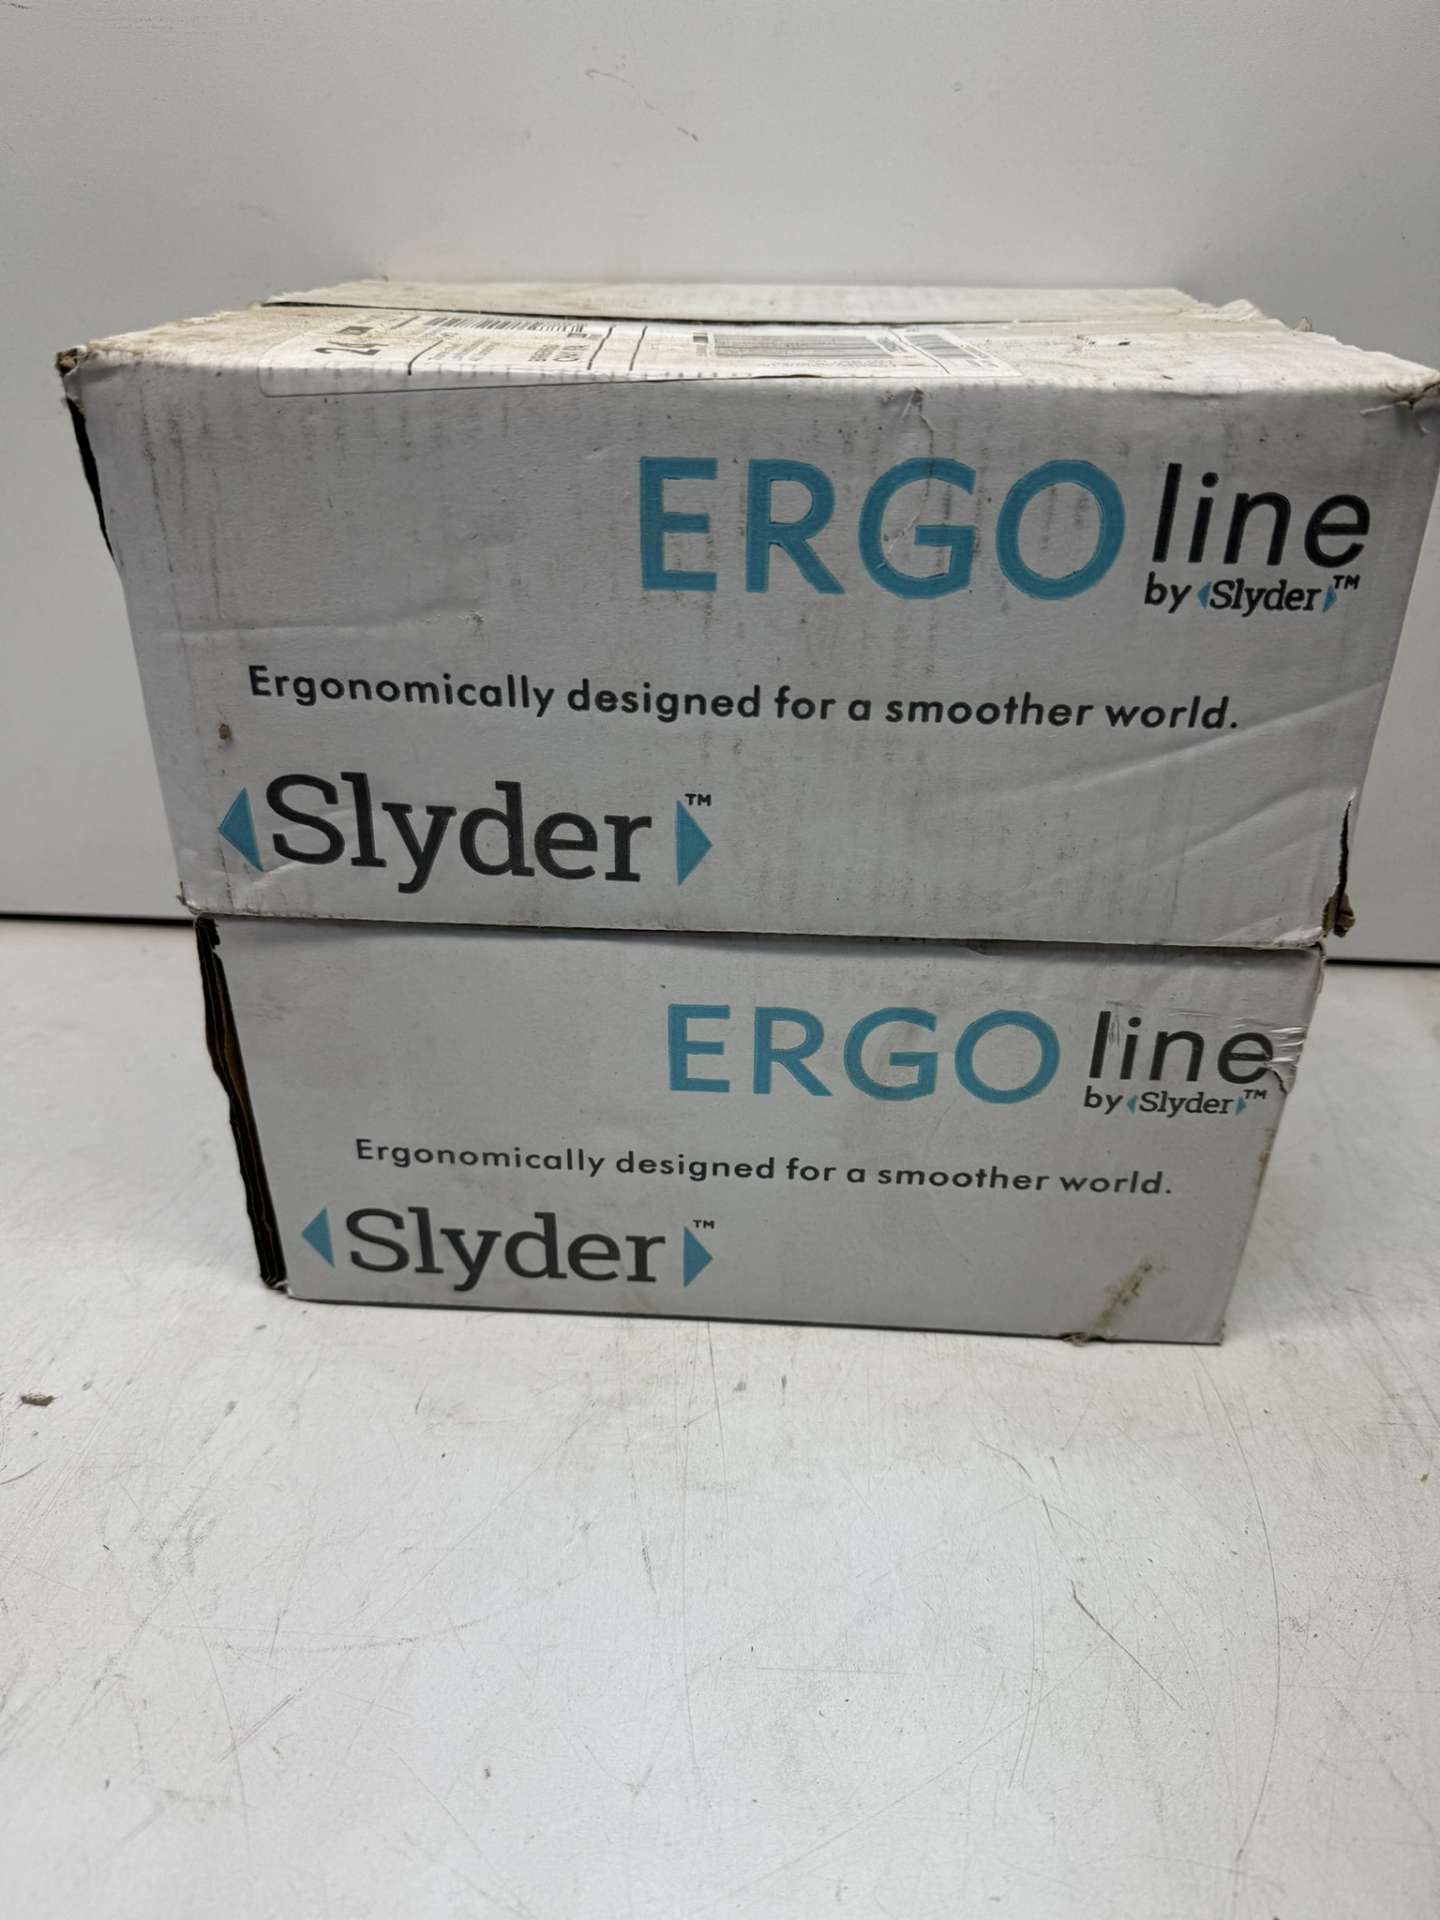 120 X SLYDER I070-0001 83MM ERGOLINE BACK FIXING BRACKETS - Image 2 of 3